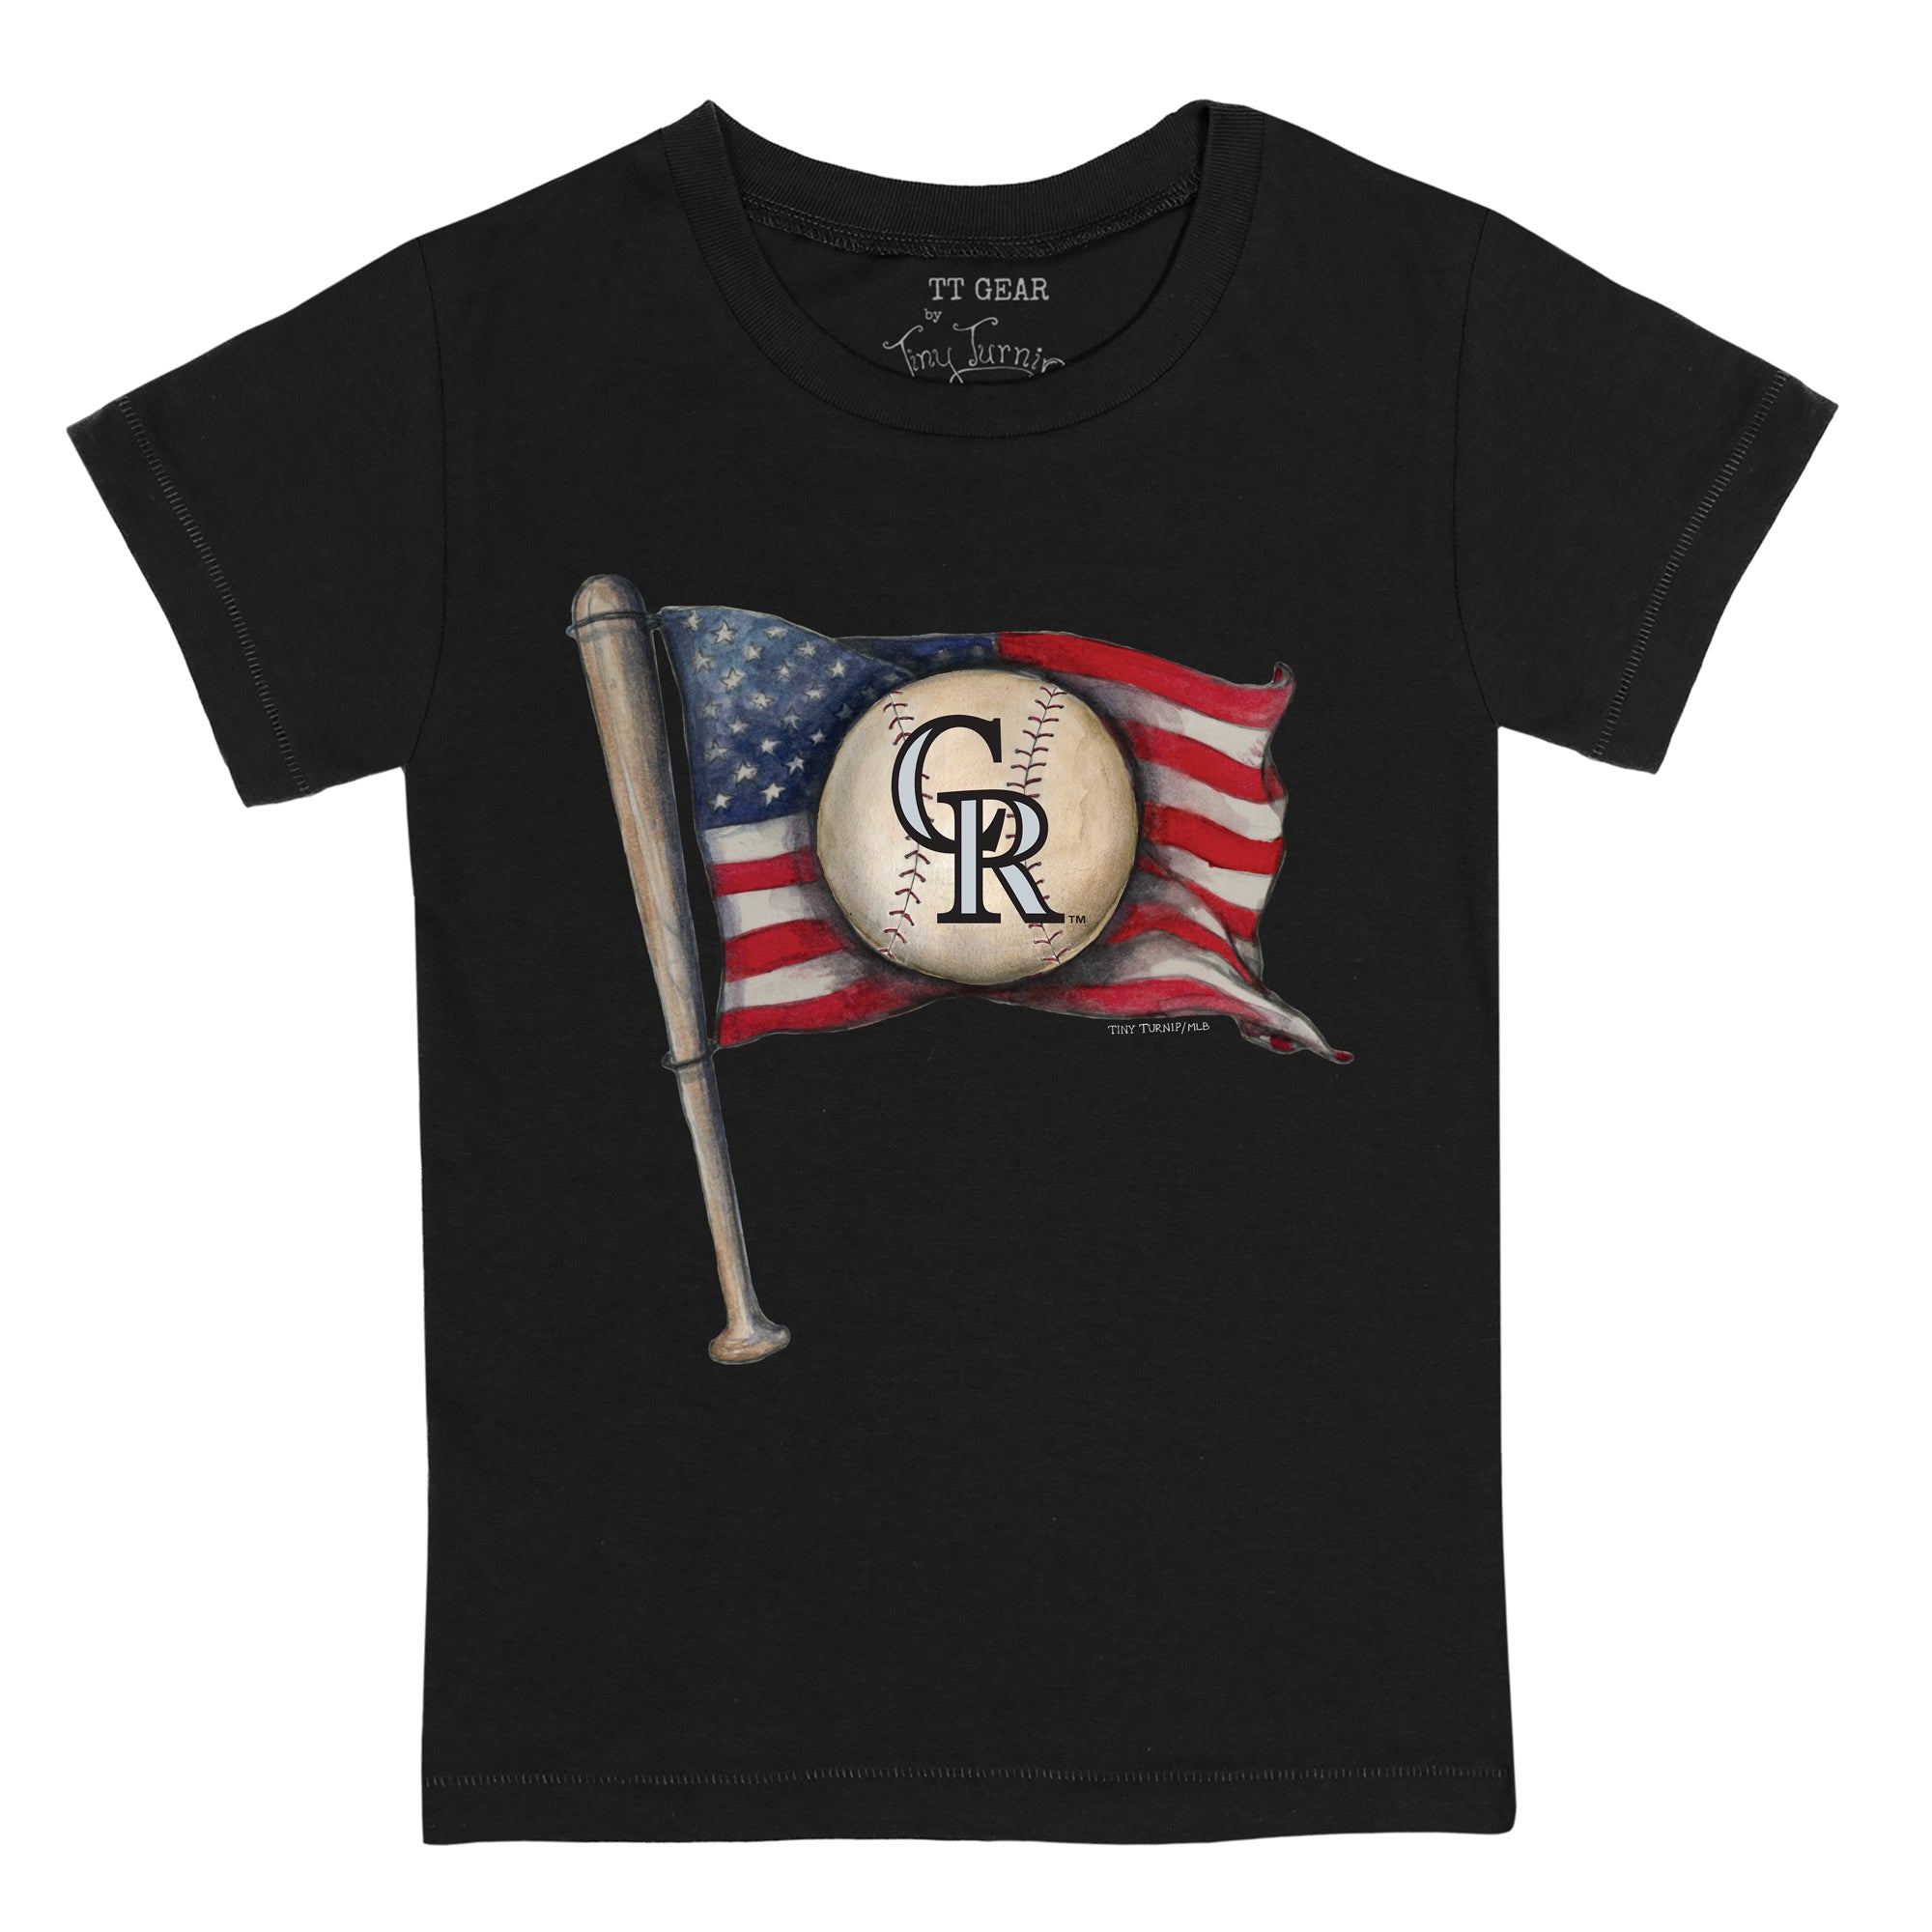 Youth Tiny Turnip White/Black Colorado Rockies Baseball Flag Raglan 3/4 Sleeve T-Shirt Size: Small